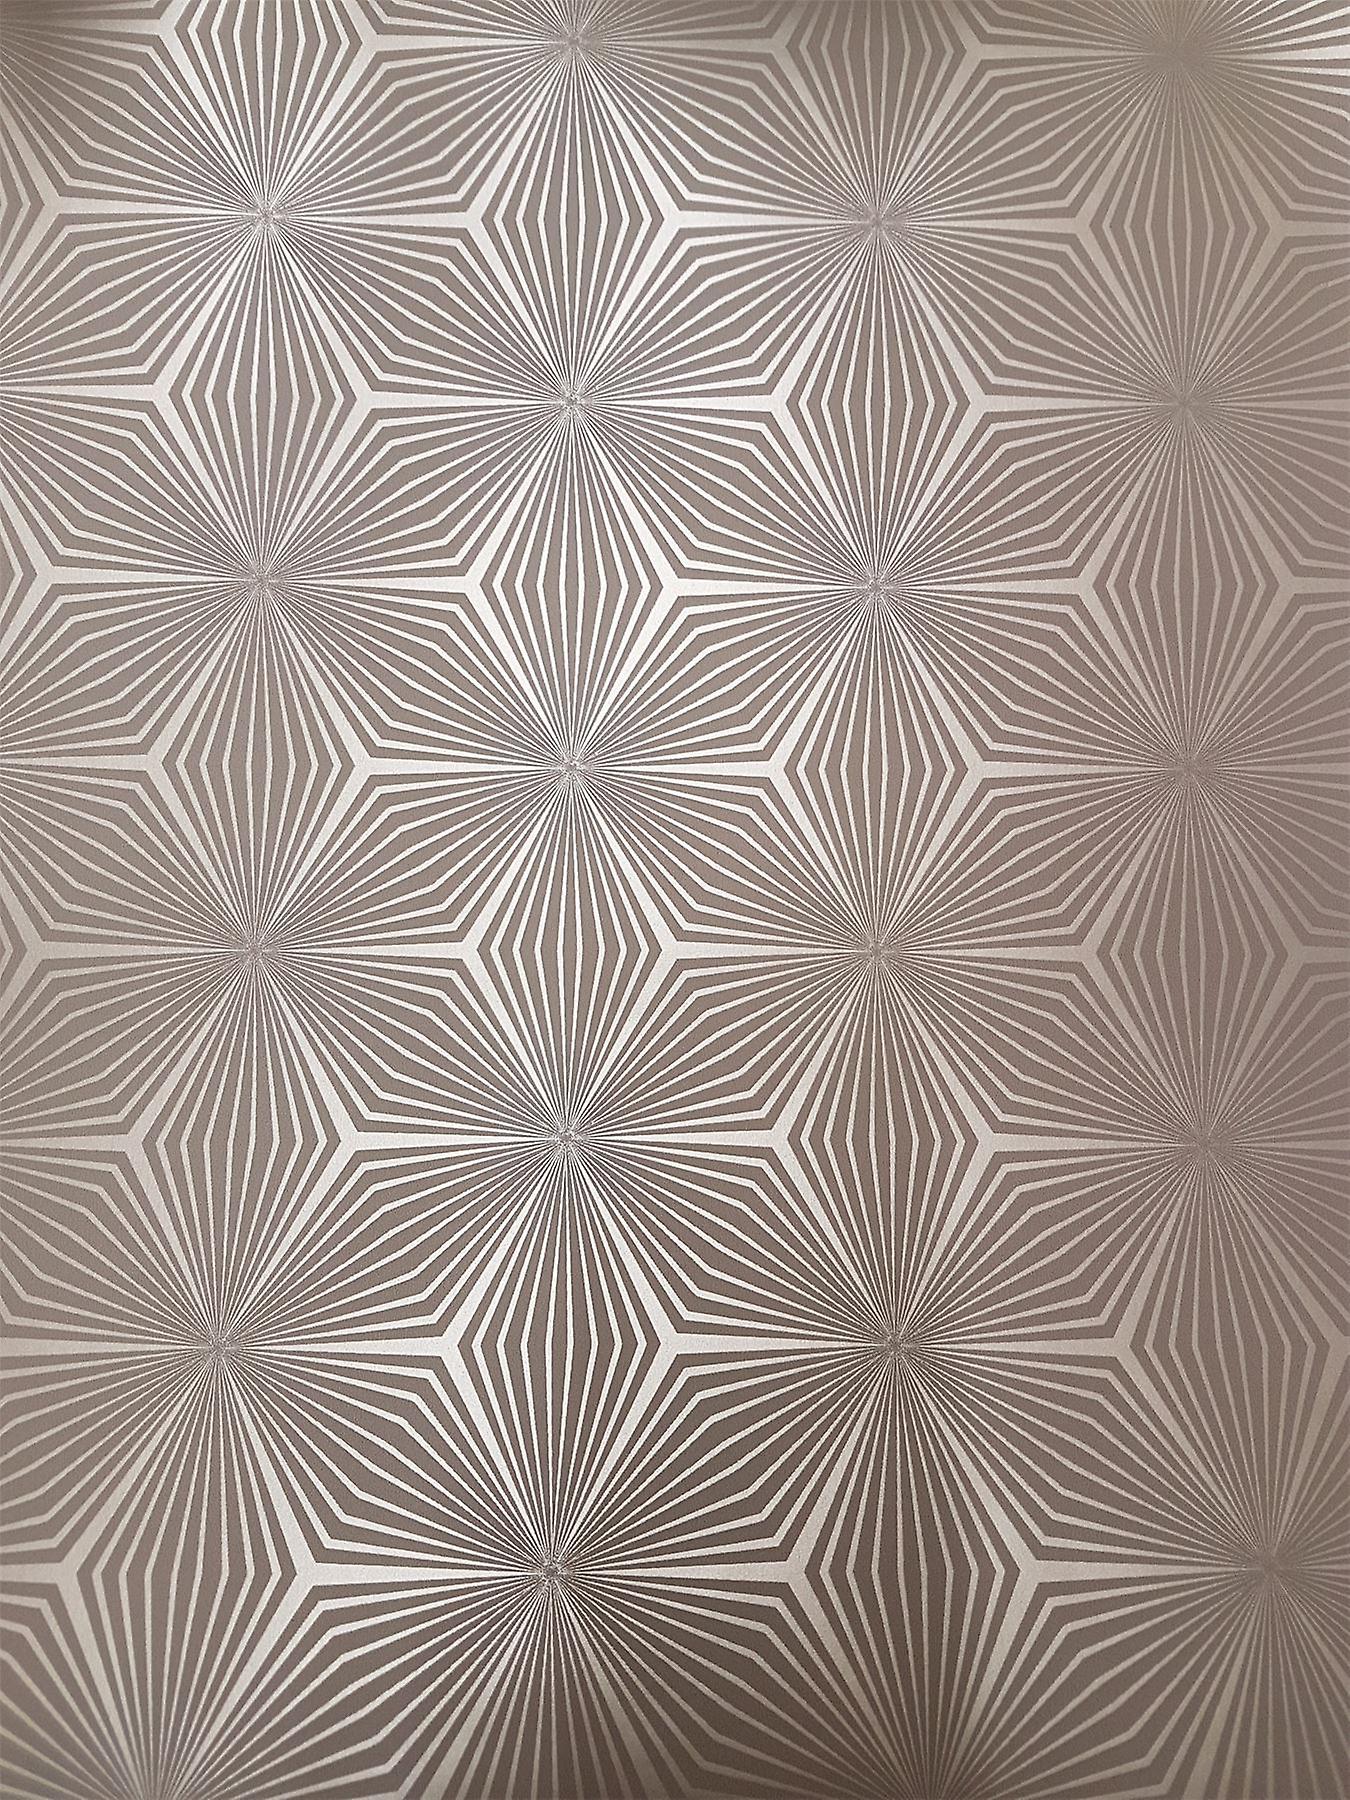 Geometric Star Metallic Wallpaper Taupe Silver Shimmer Shiny